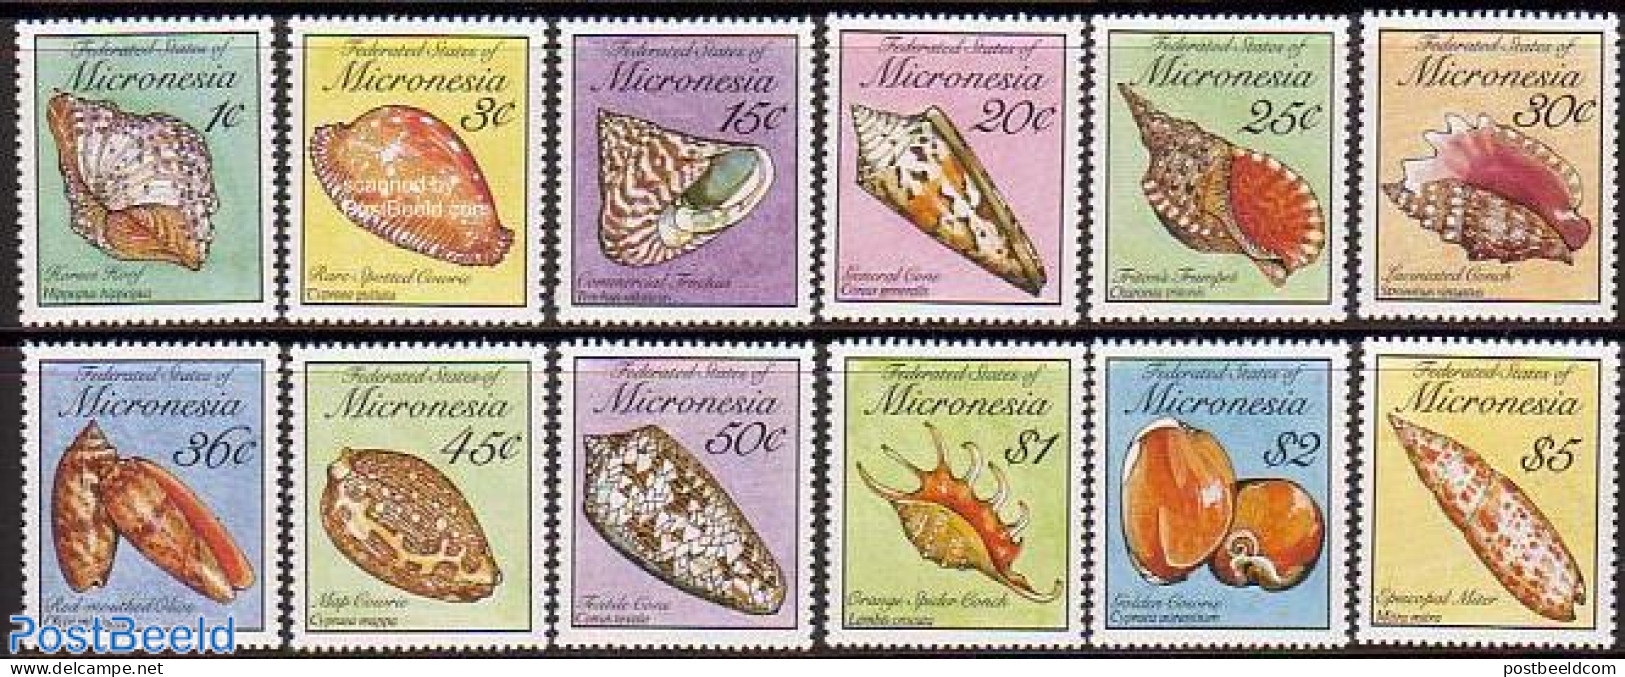 Micronesia 1989 Shells 12v, Mint NH, Nature - Shells & Crustaceans - Marine Life